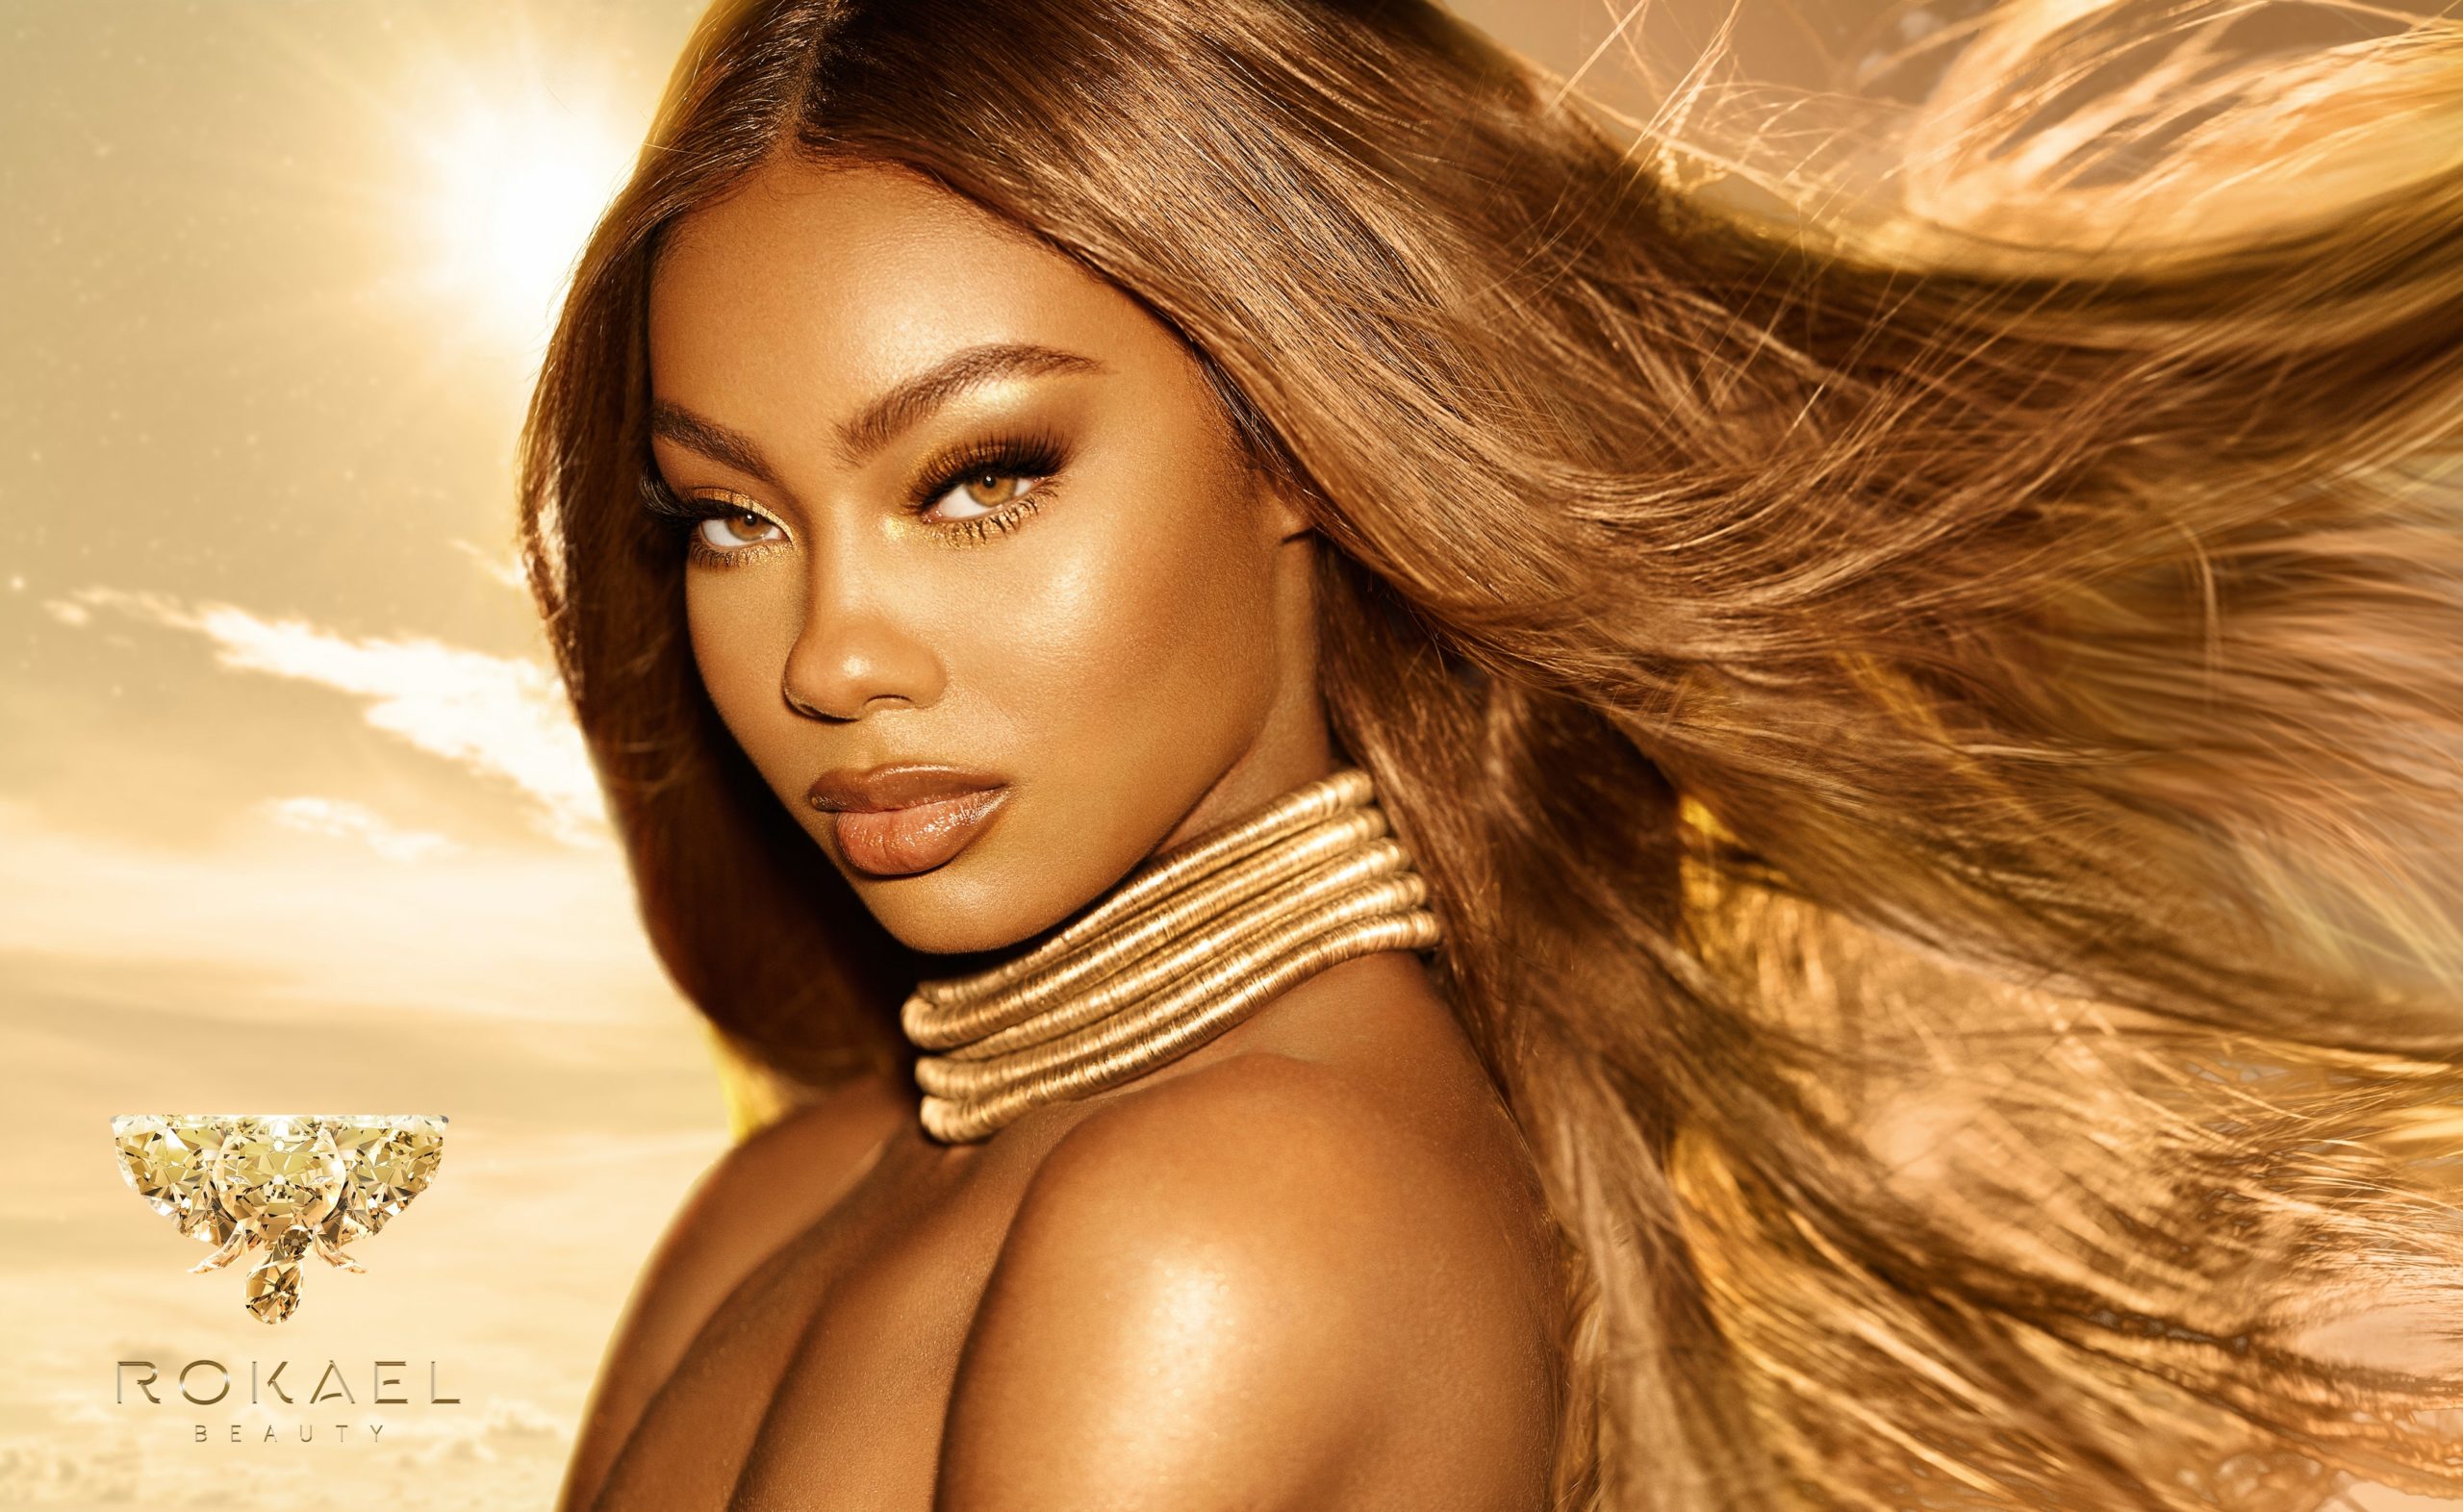 Rokael Lizama Tested Rokael Beauty’s New False Eyelashes on Beyoncé